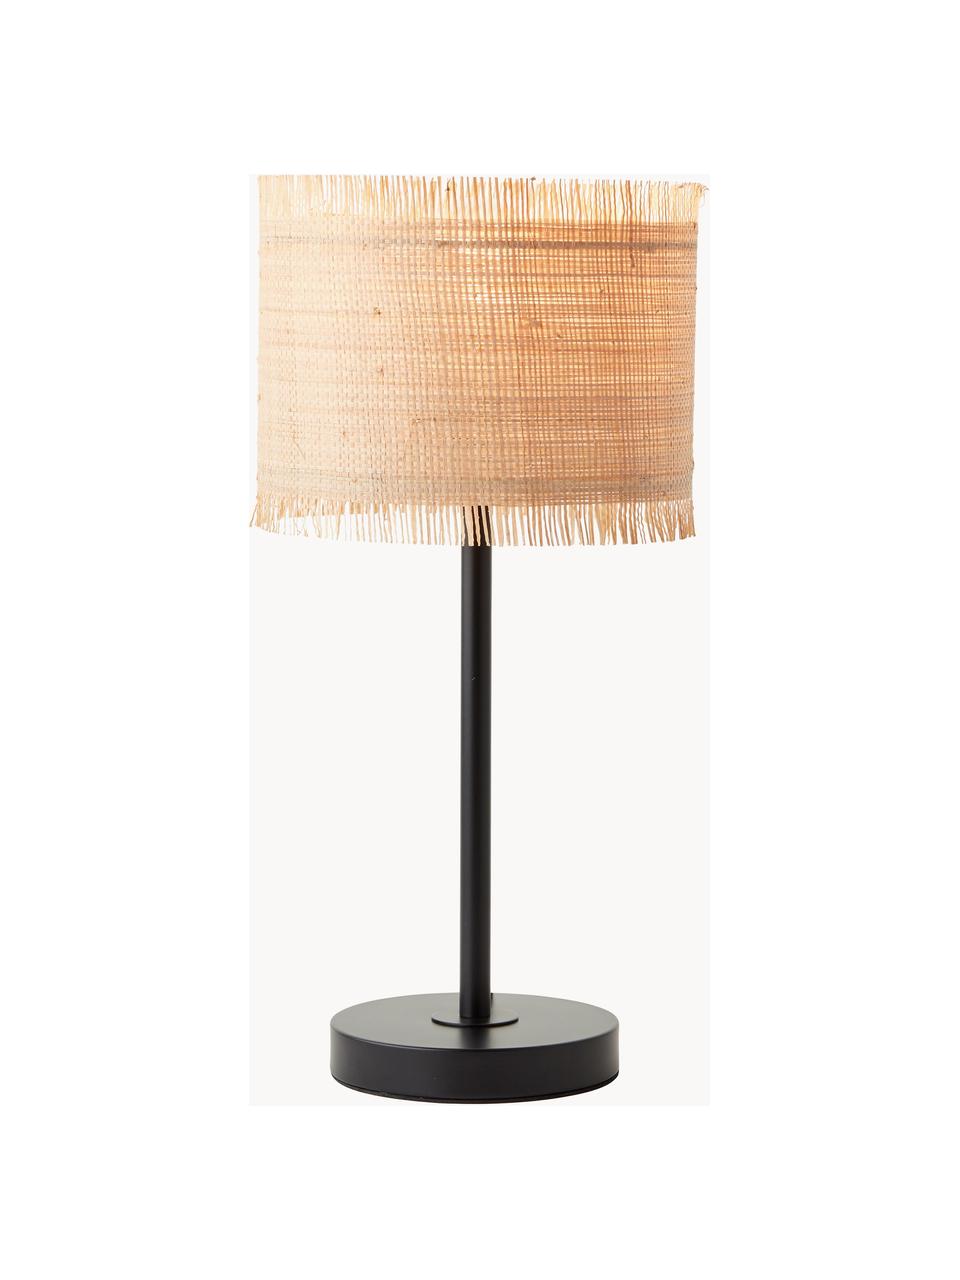 Tafellamp Raffy van zeegras, Lampenkap: zeegras, Lichtbeige, zwart, Ø 22 x H 46 cm